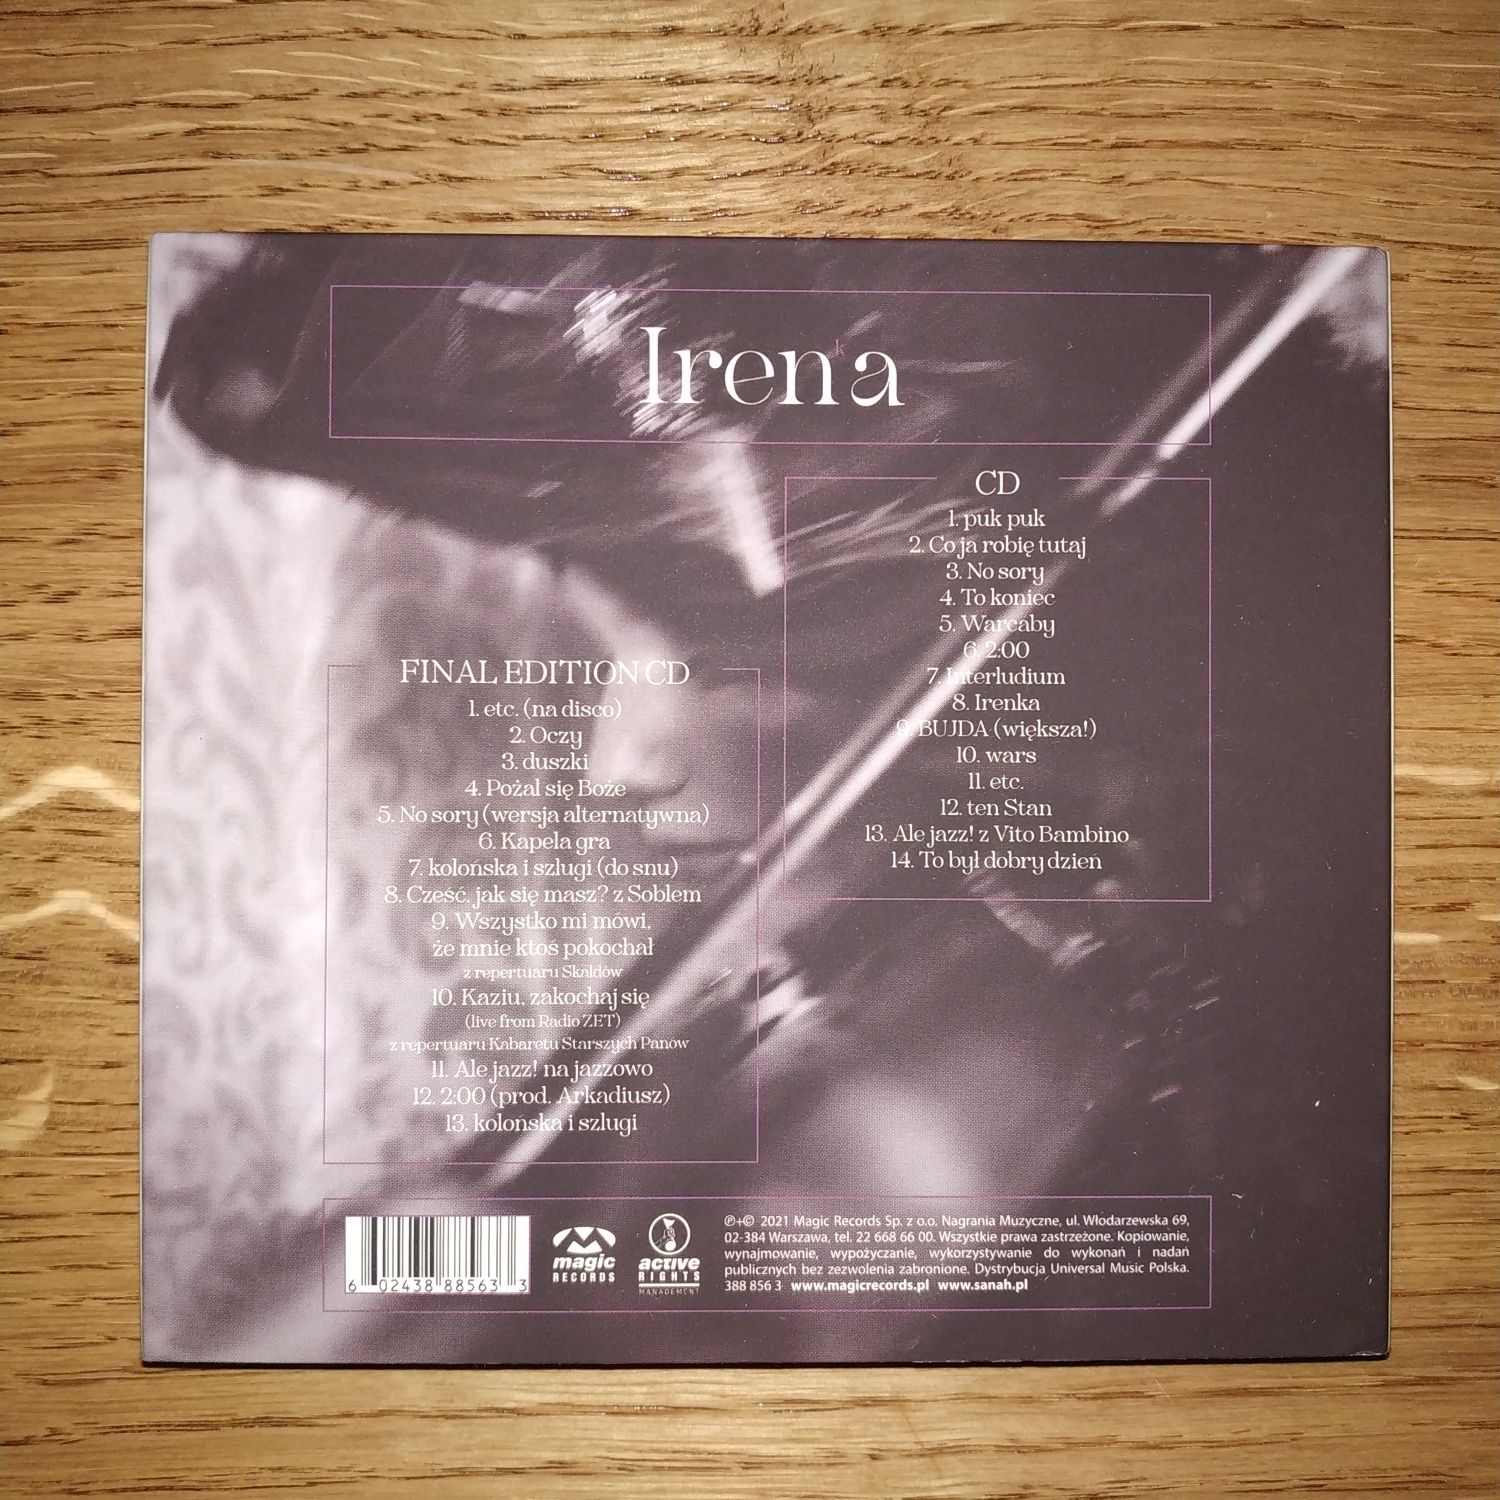 Płyta/album sanah Irenka Final Edition